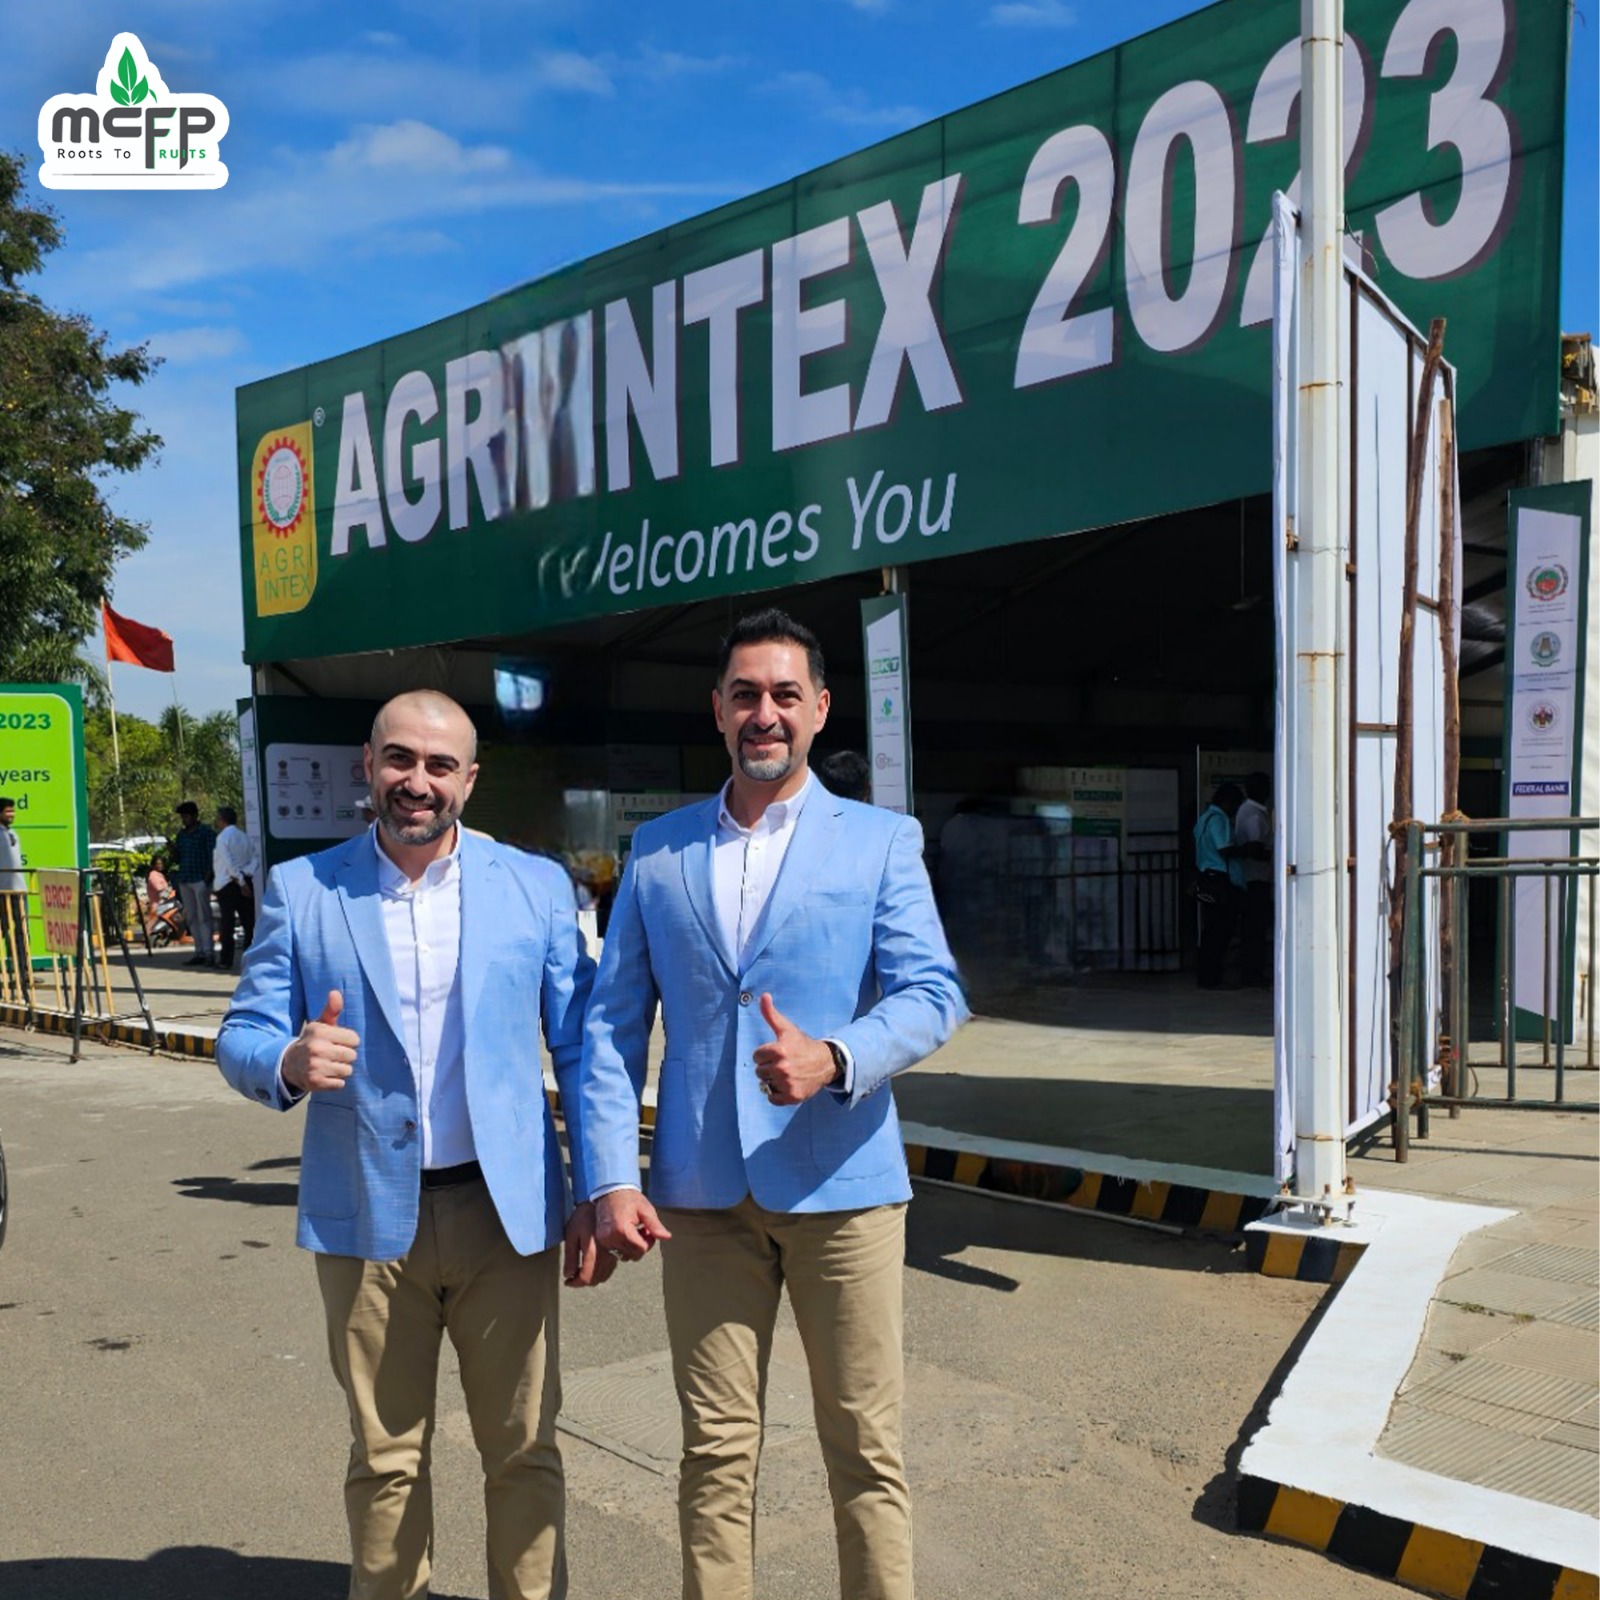 MCFP visit to Agri Intex Exhibition